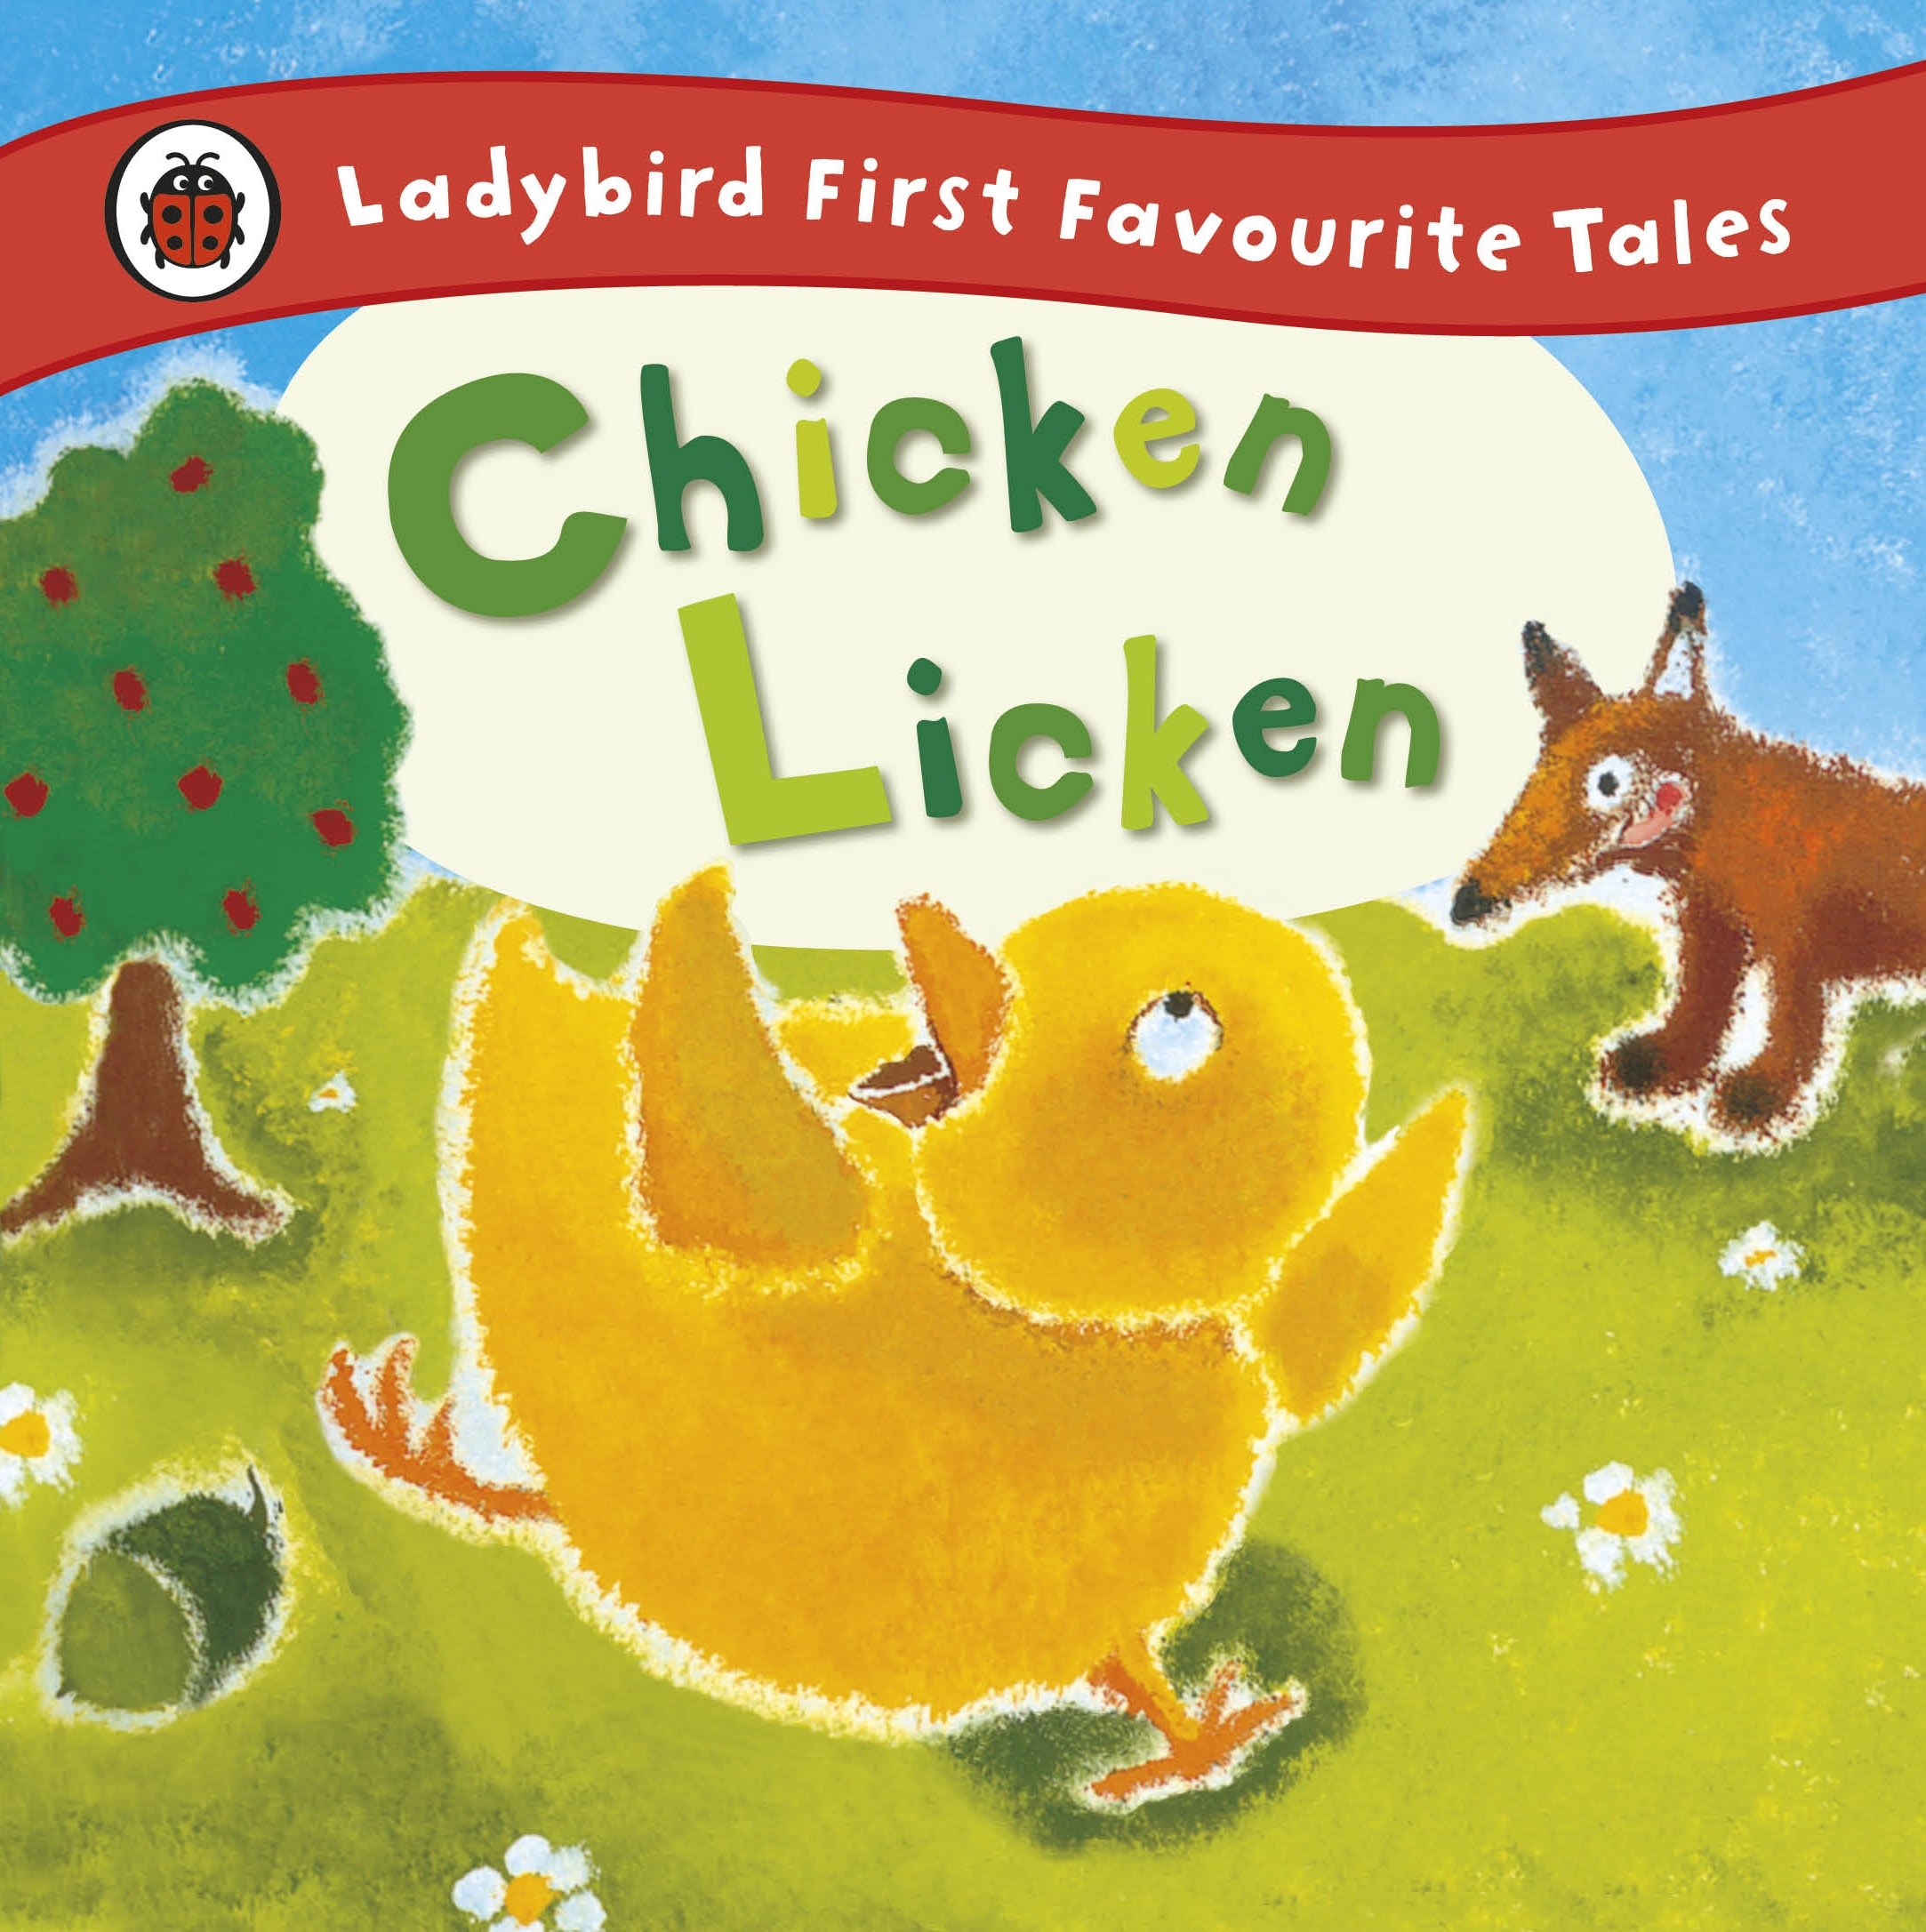 Book “Chicken Licken: Ladybird First Favourite Tales” by Mandy Ross — March 1, 2012